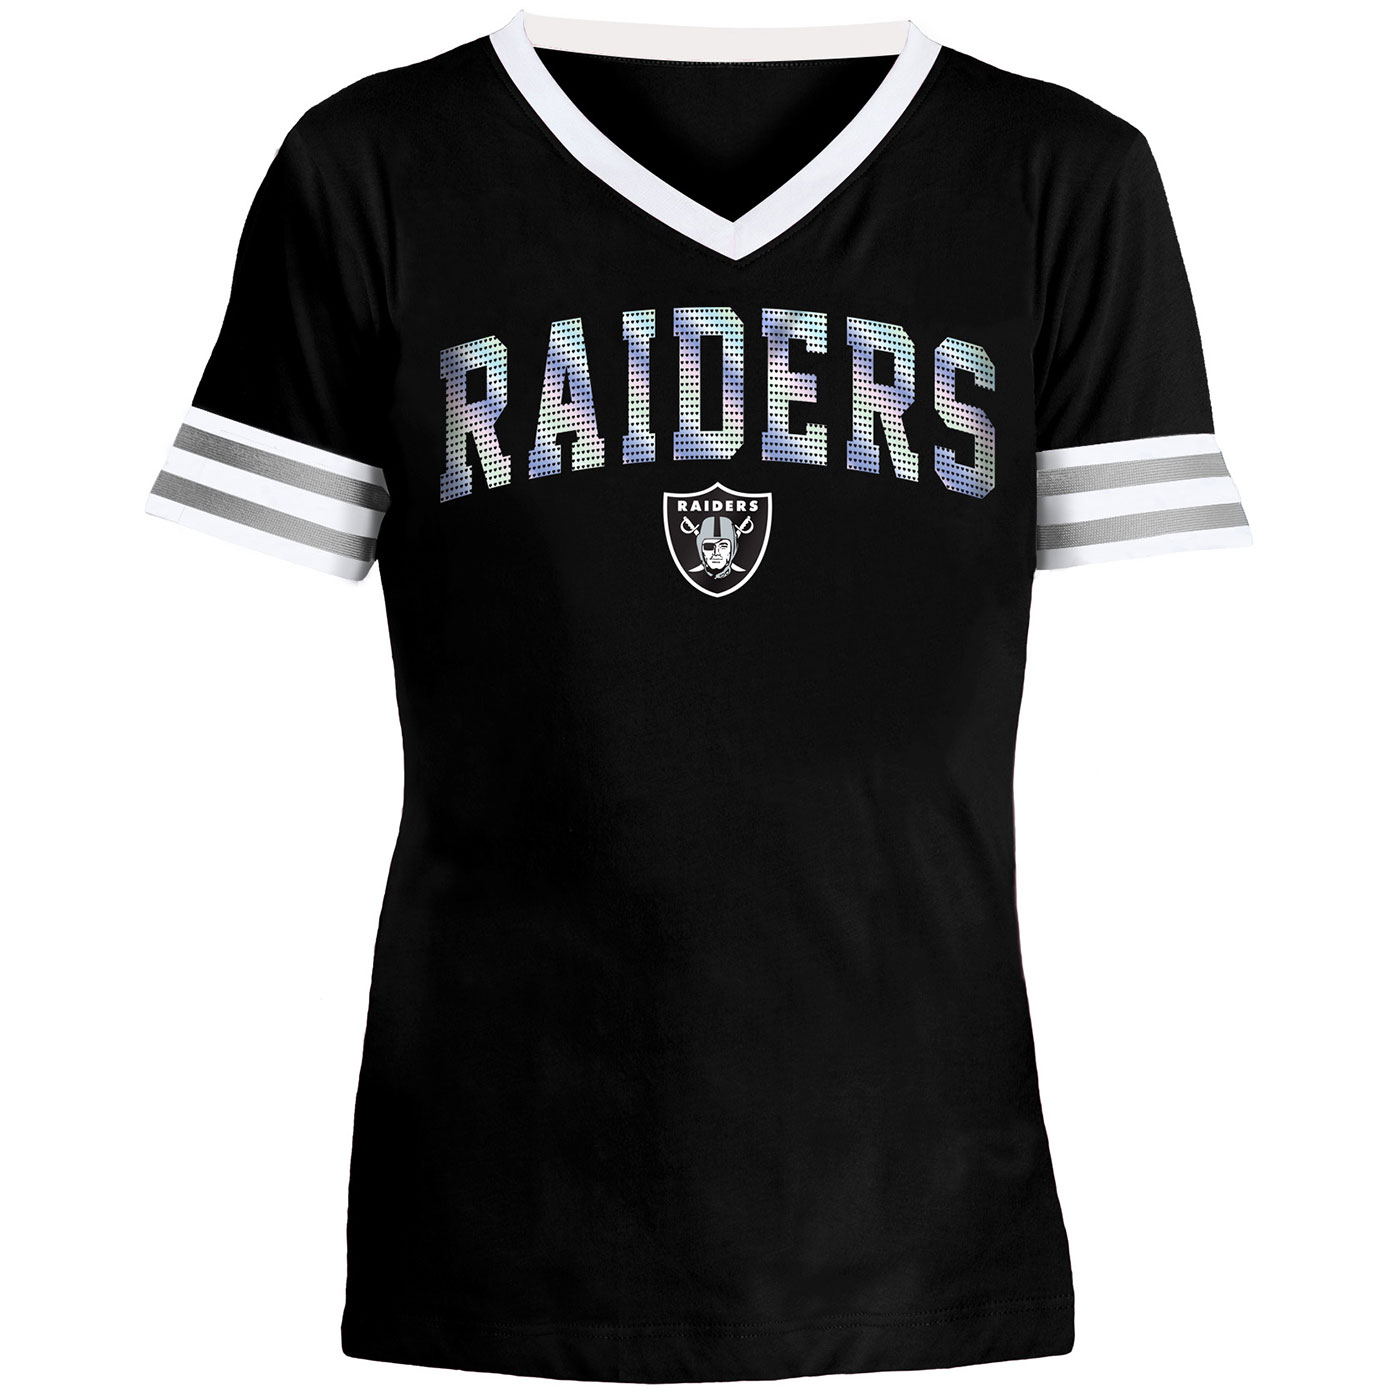 raiders jersey for girls